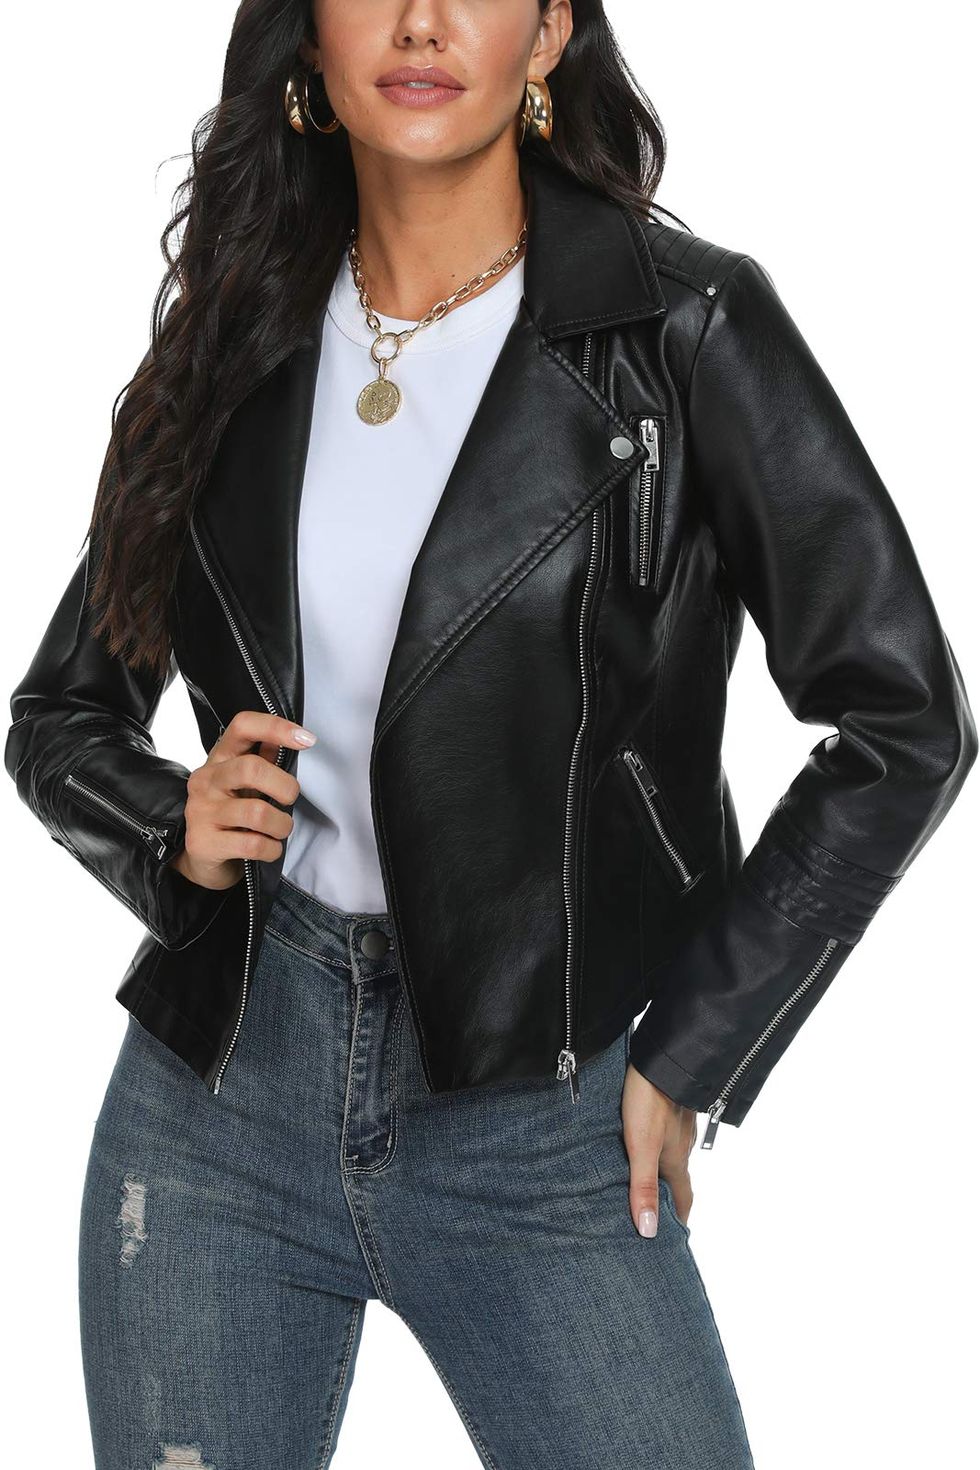 Genuine Womens Brown Suede Leather Bomber Jacket - AngelJackets